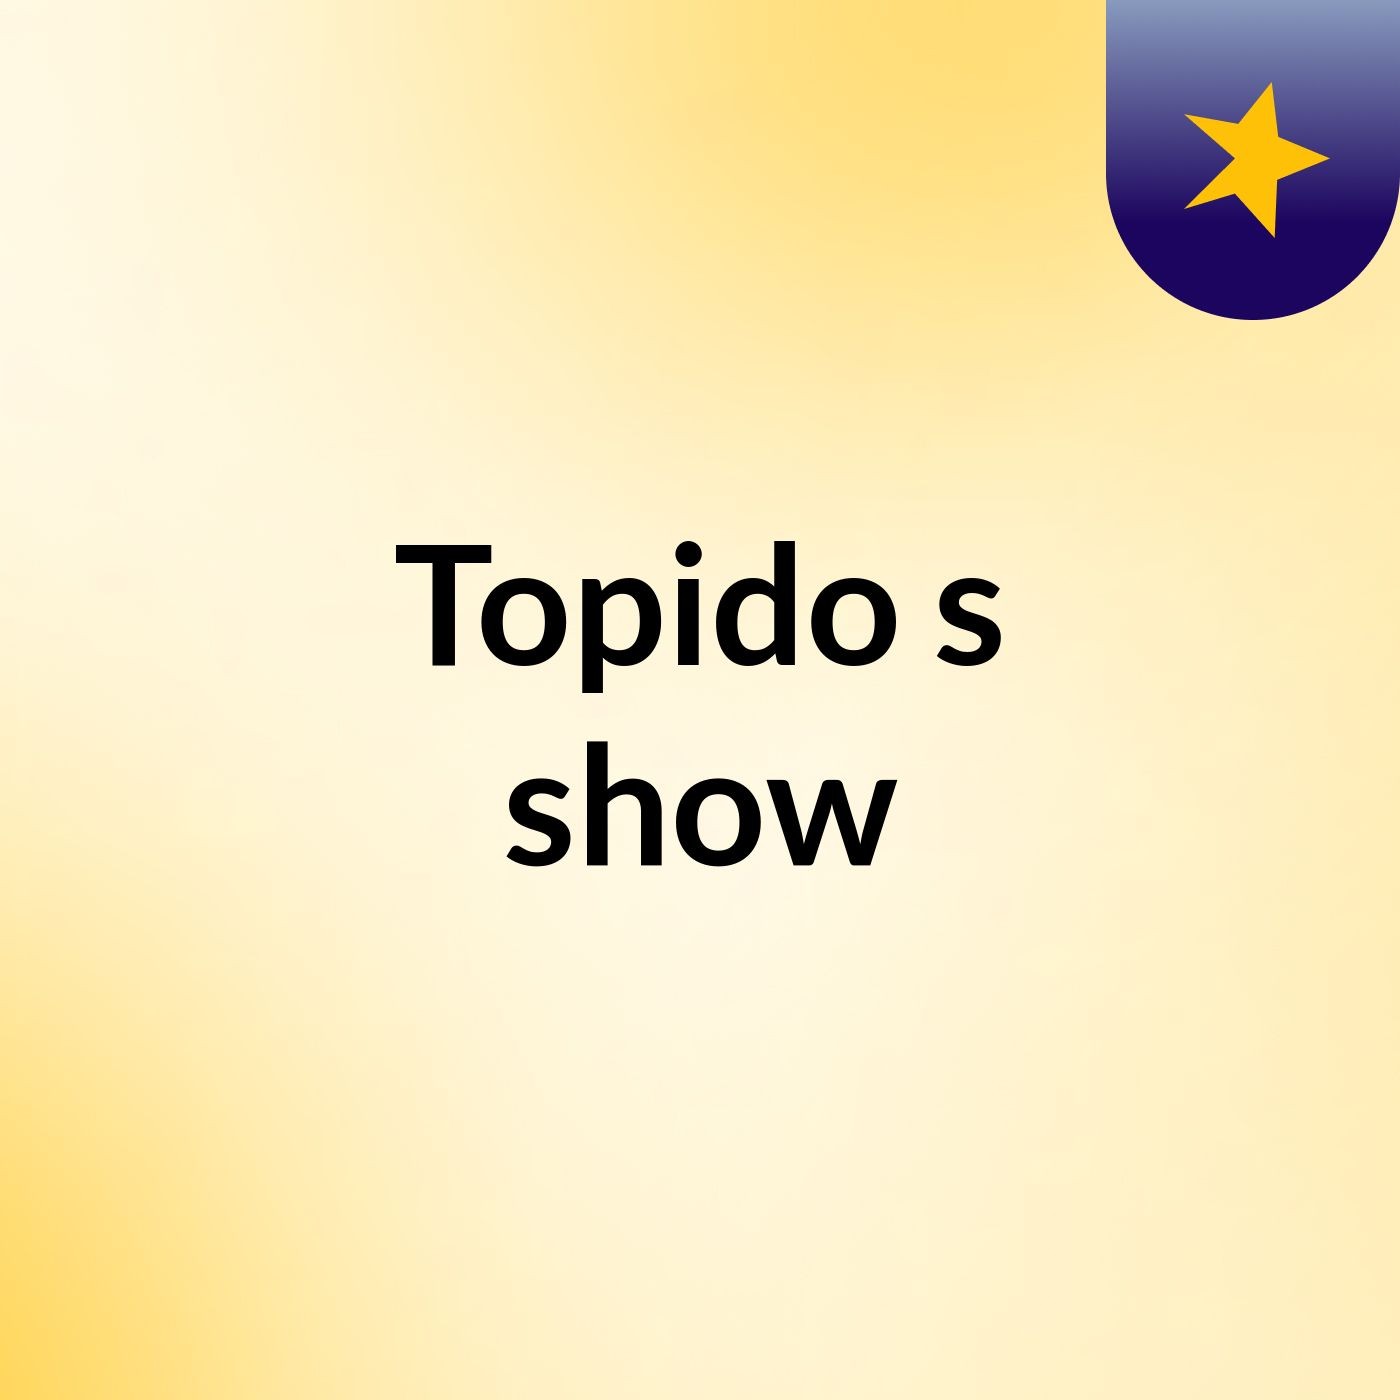 Topido's show